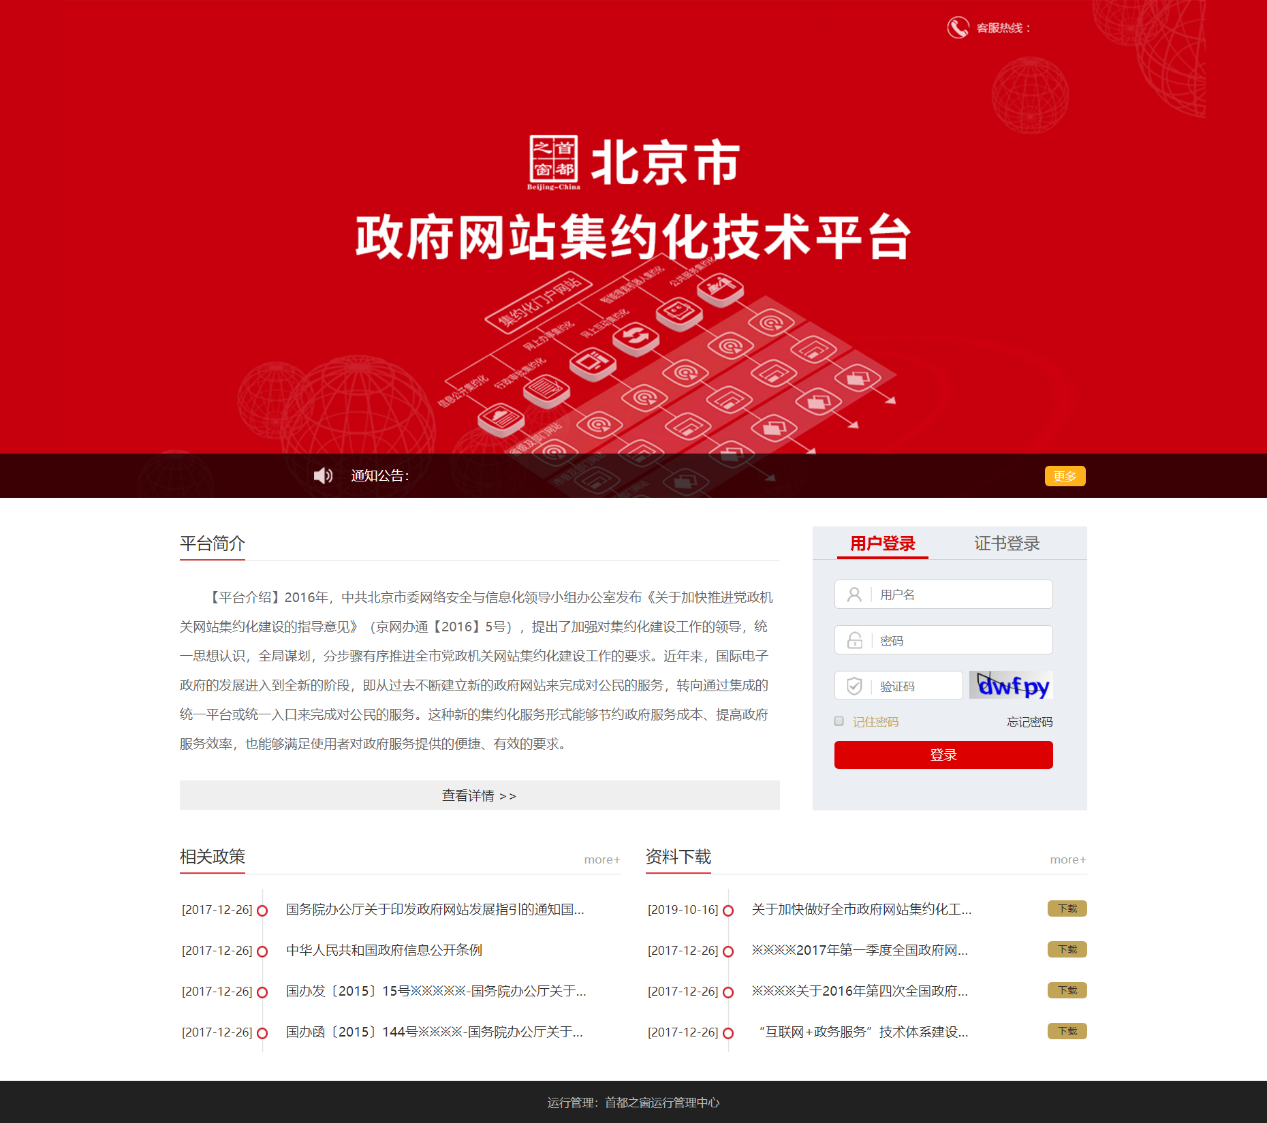 Intensive website construction for Beijing Municipal Government